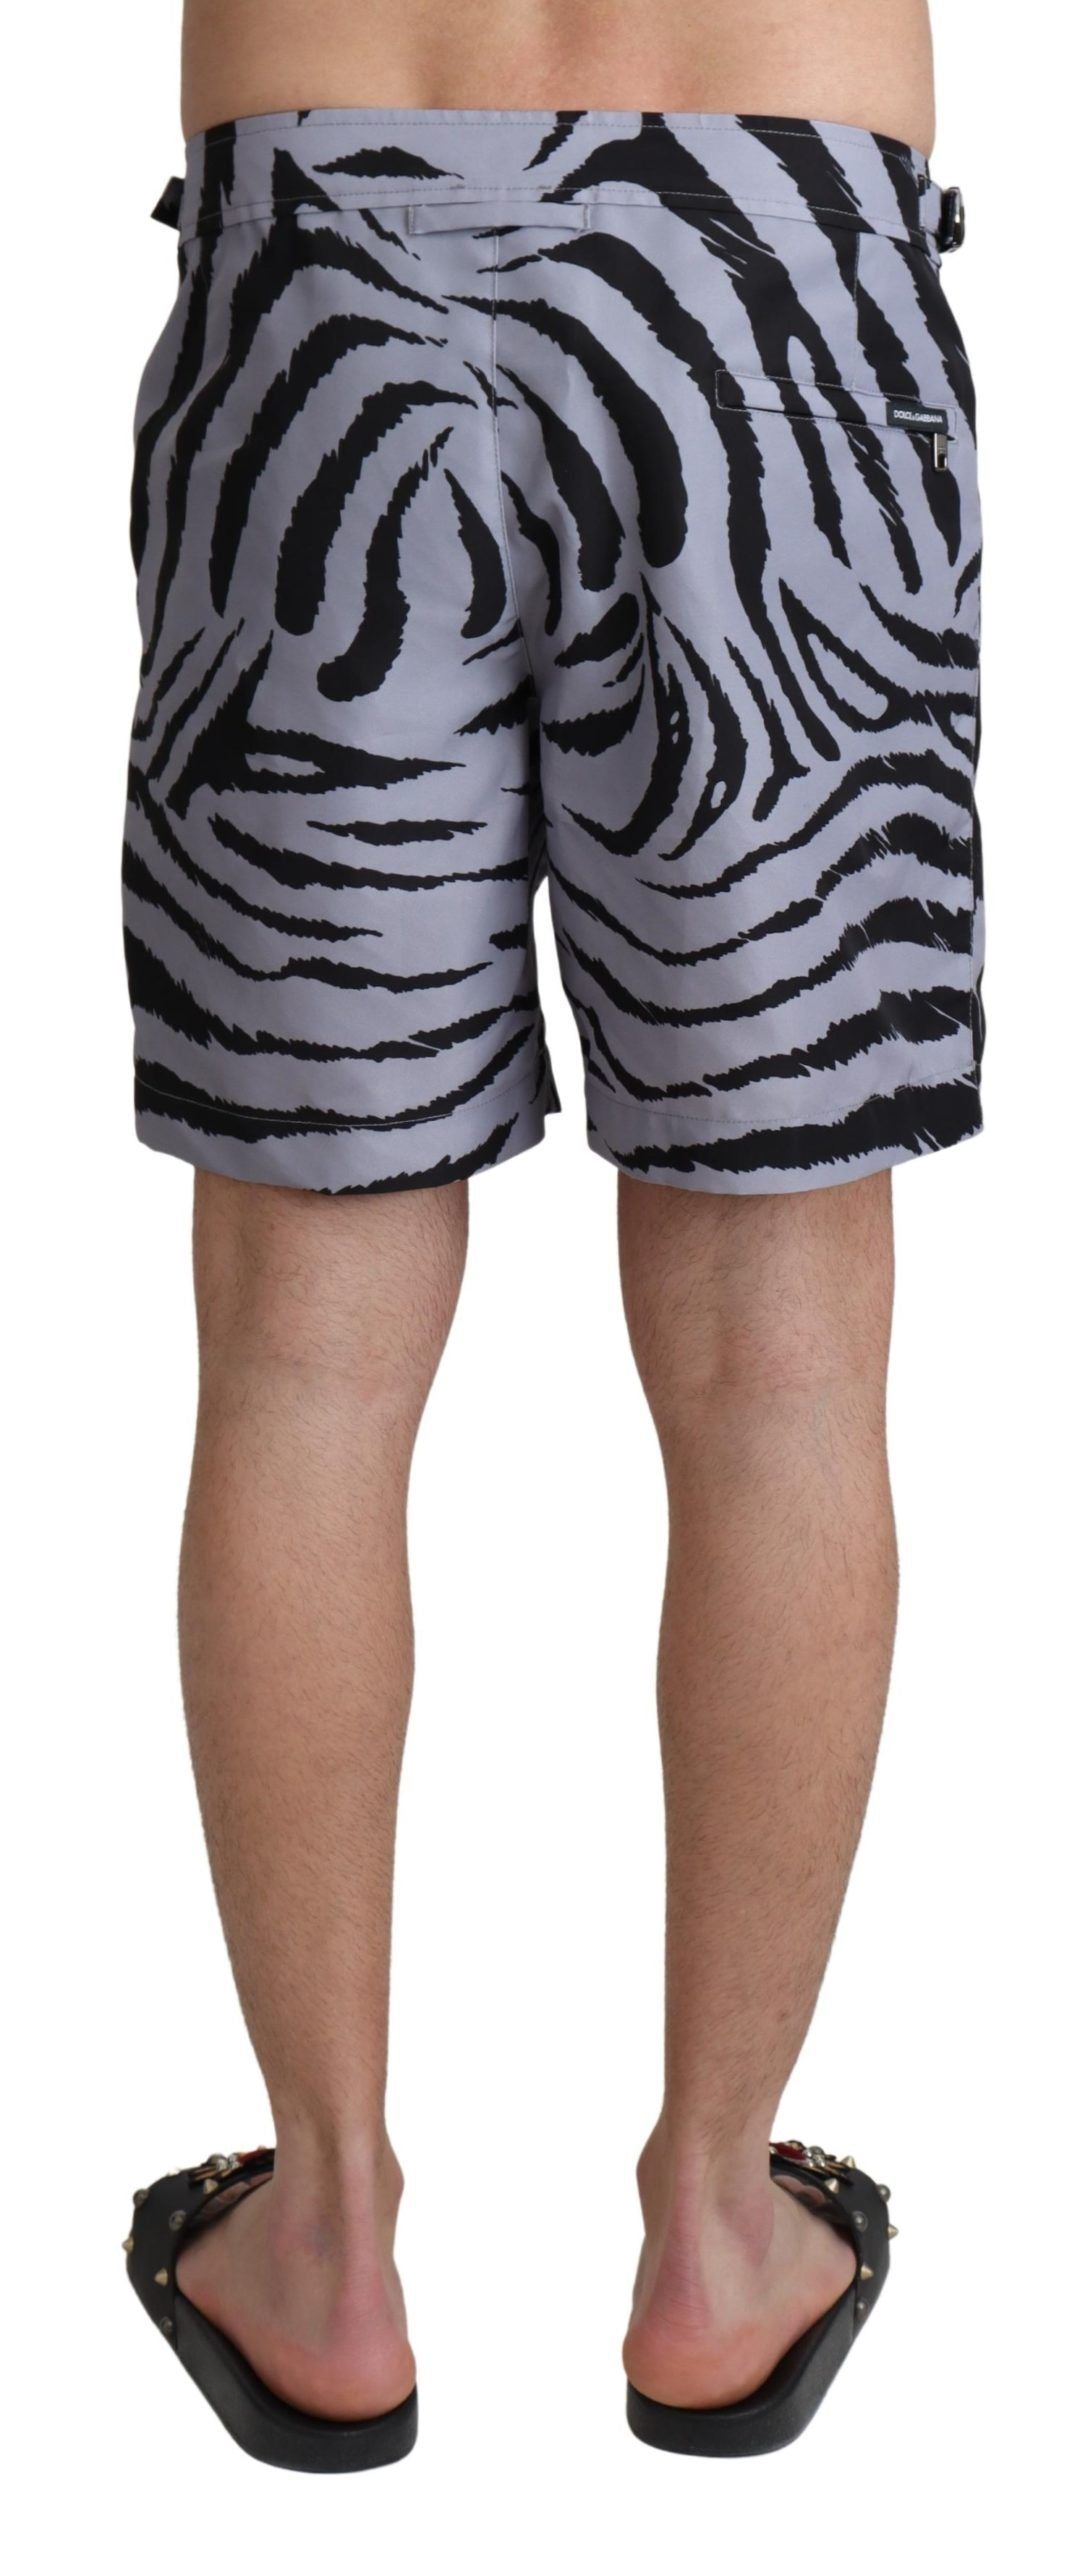 Elegant Gray Zebra Print Swim Trunks